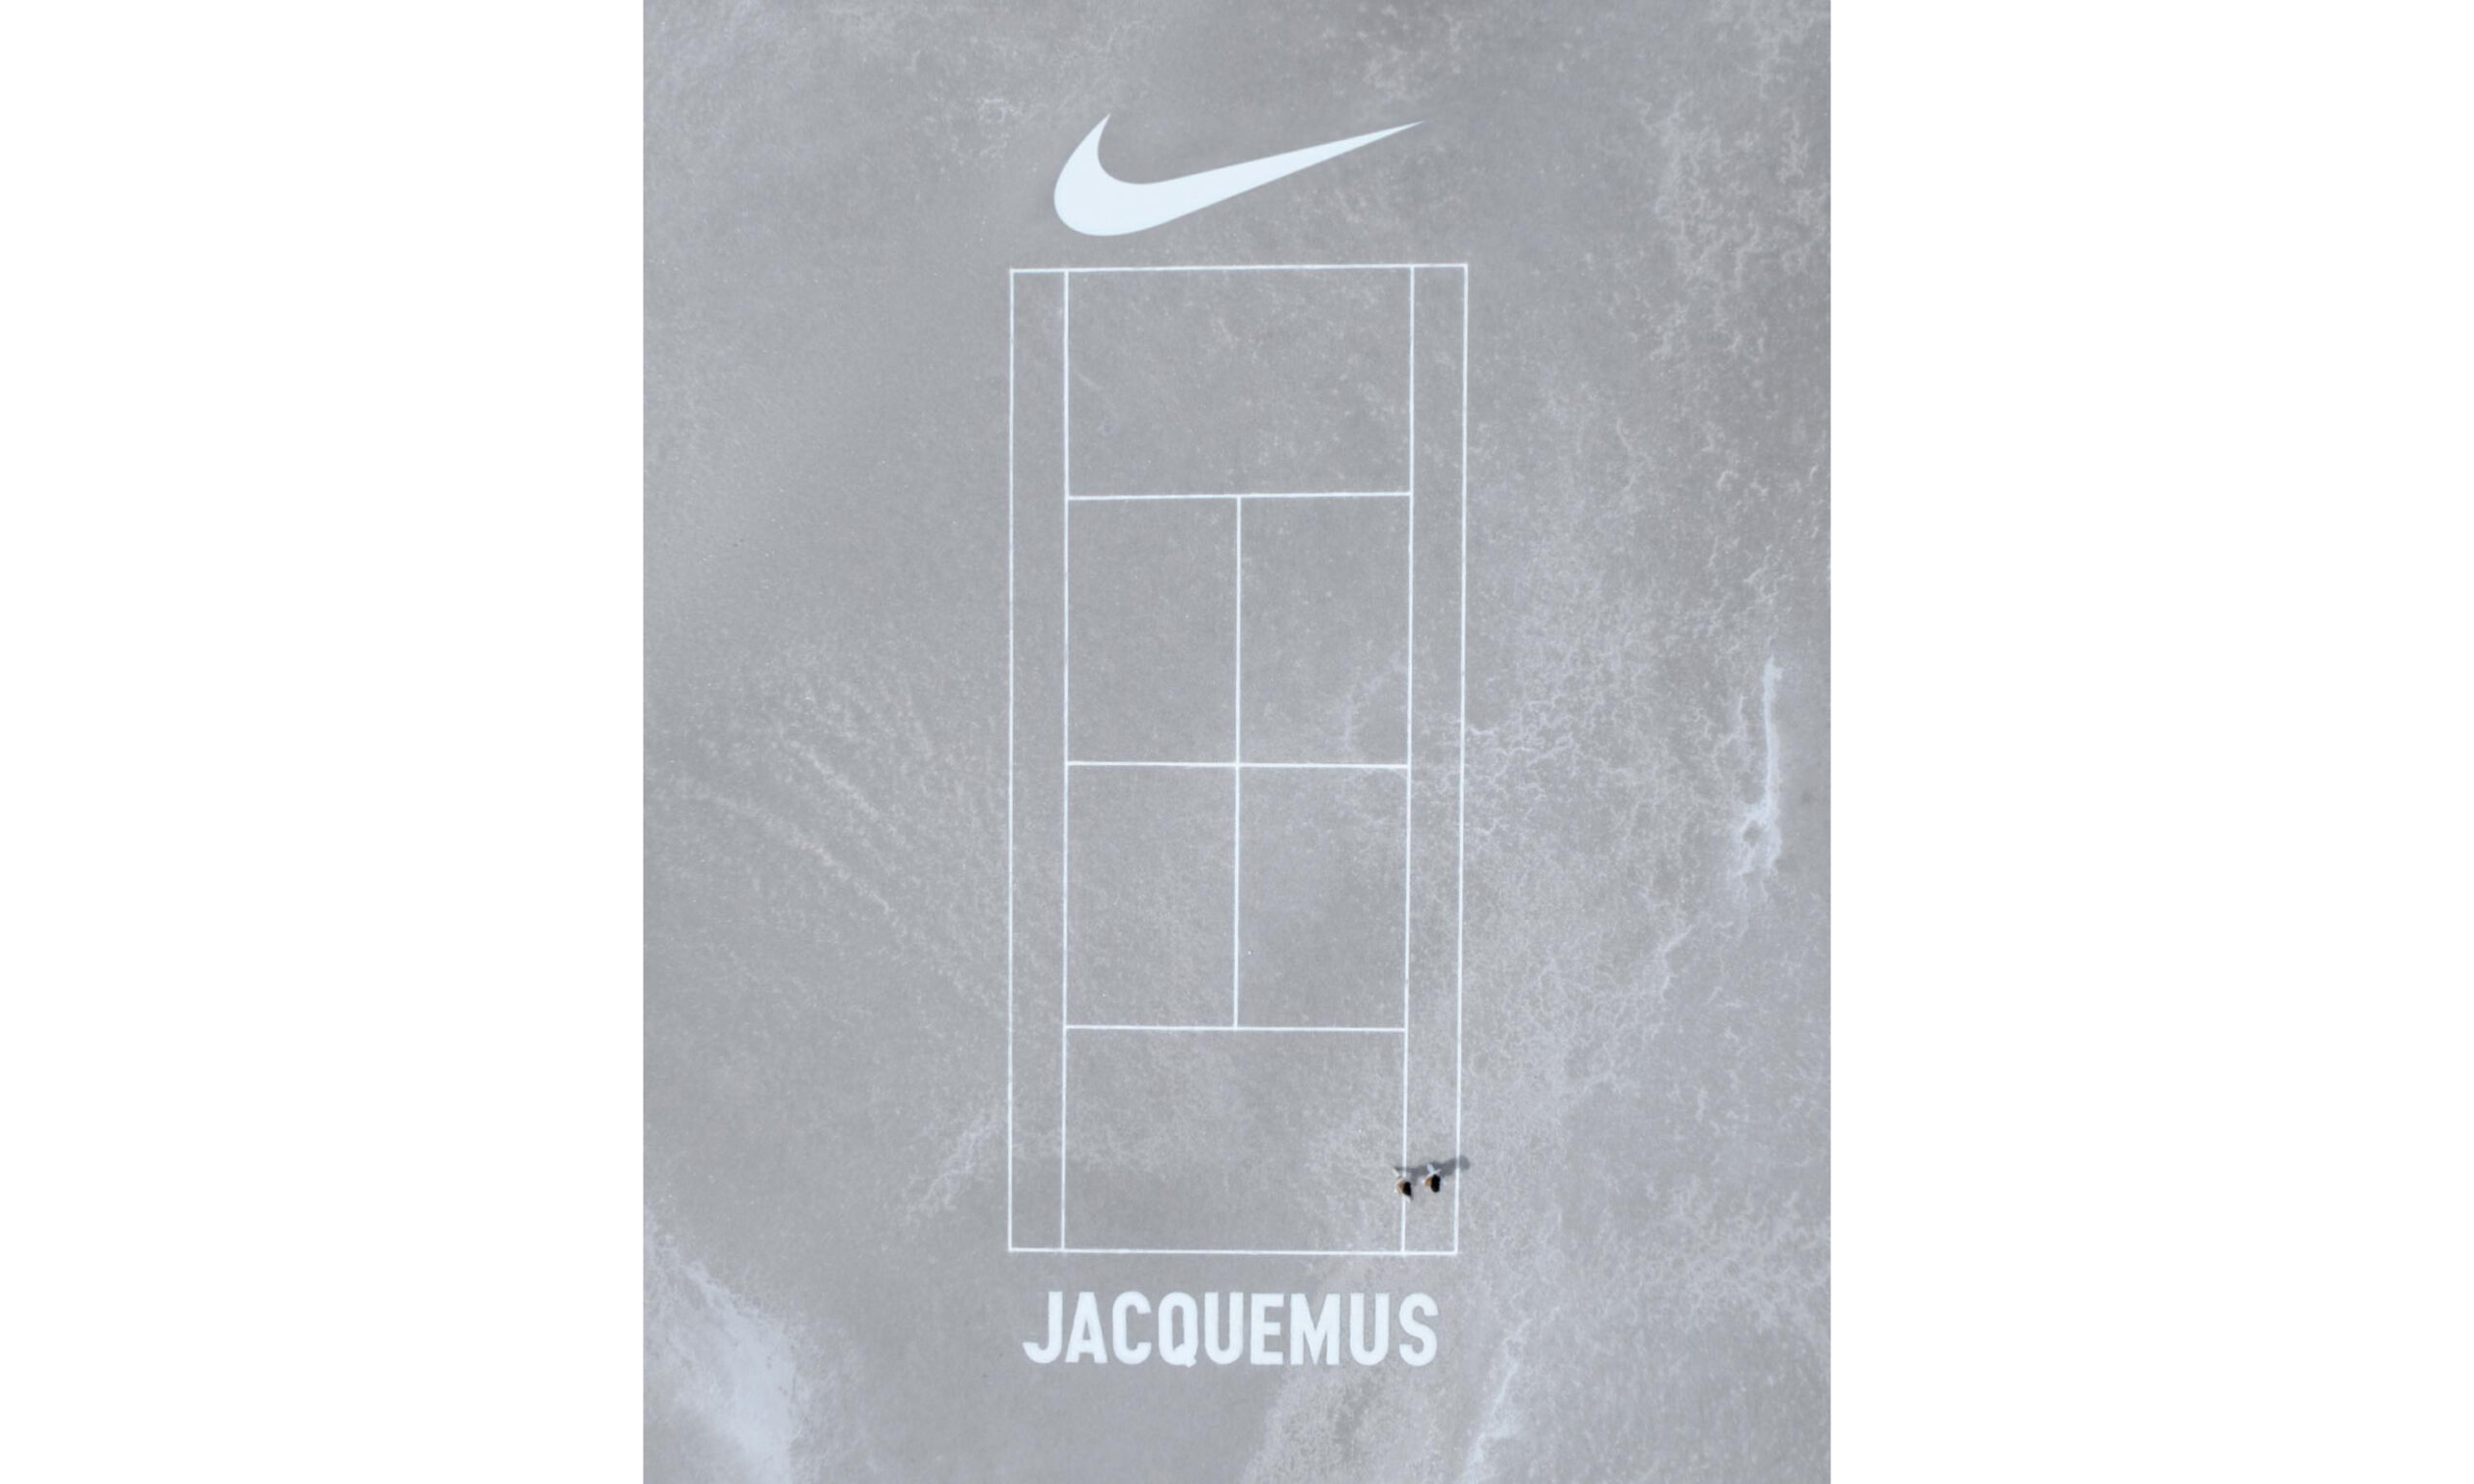 Nike x Jacquemus 释出联名系列预告